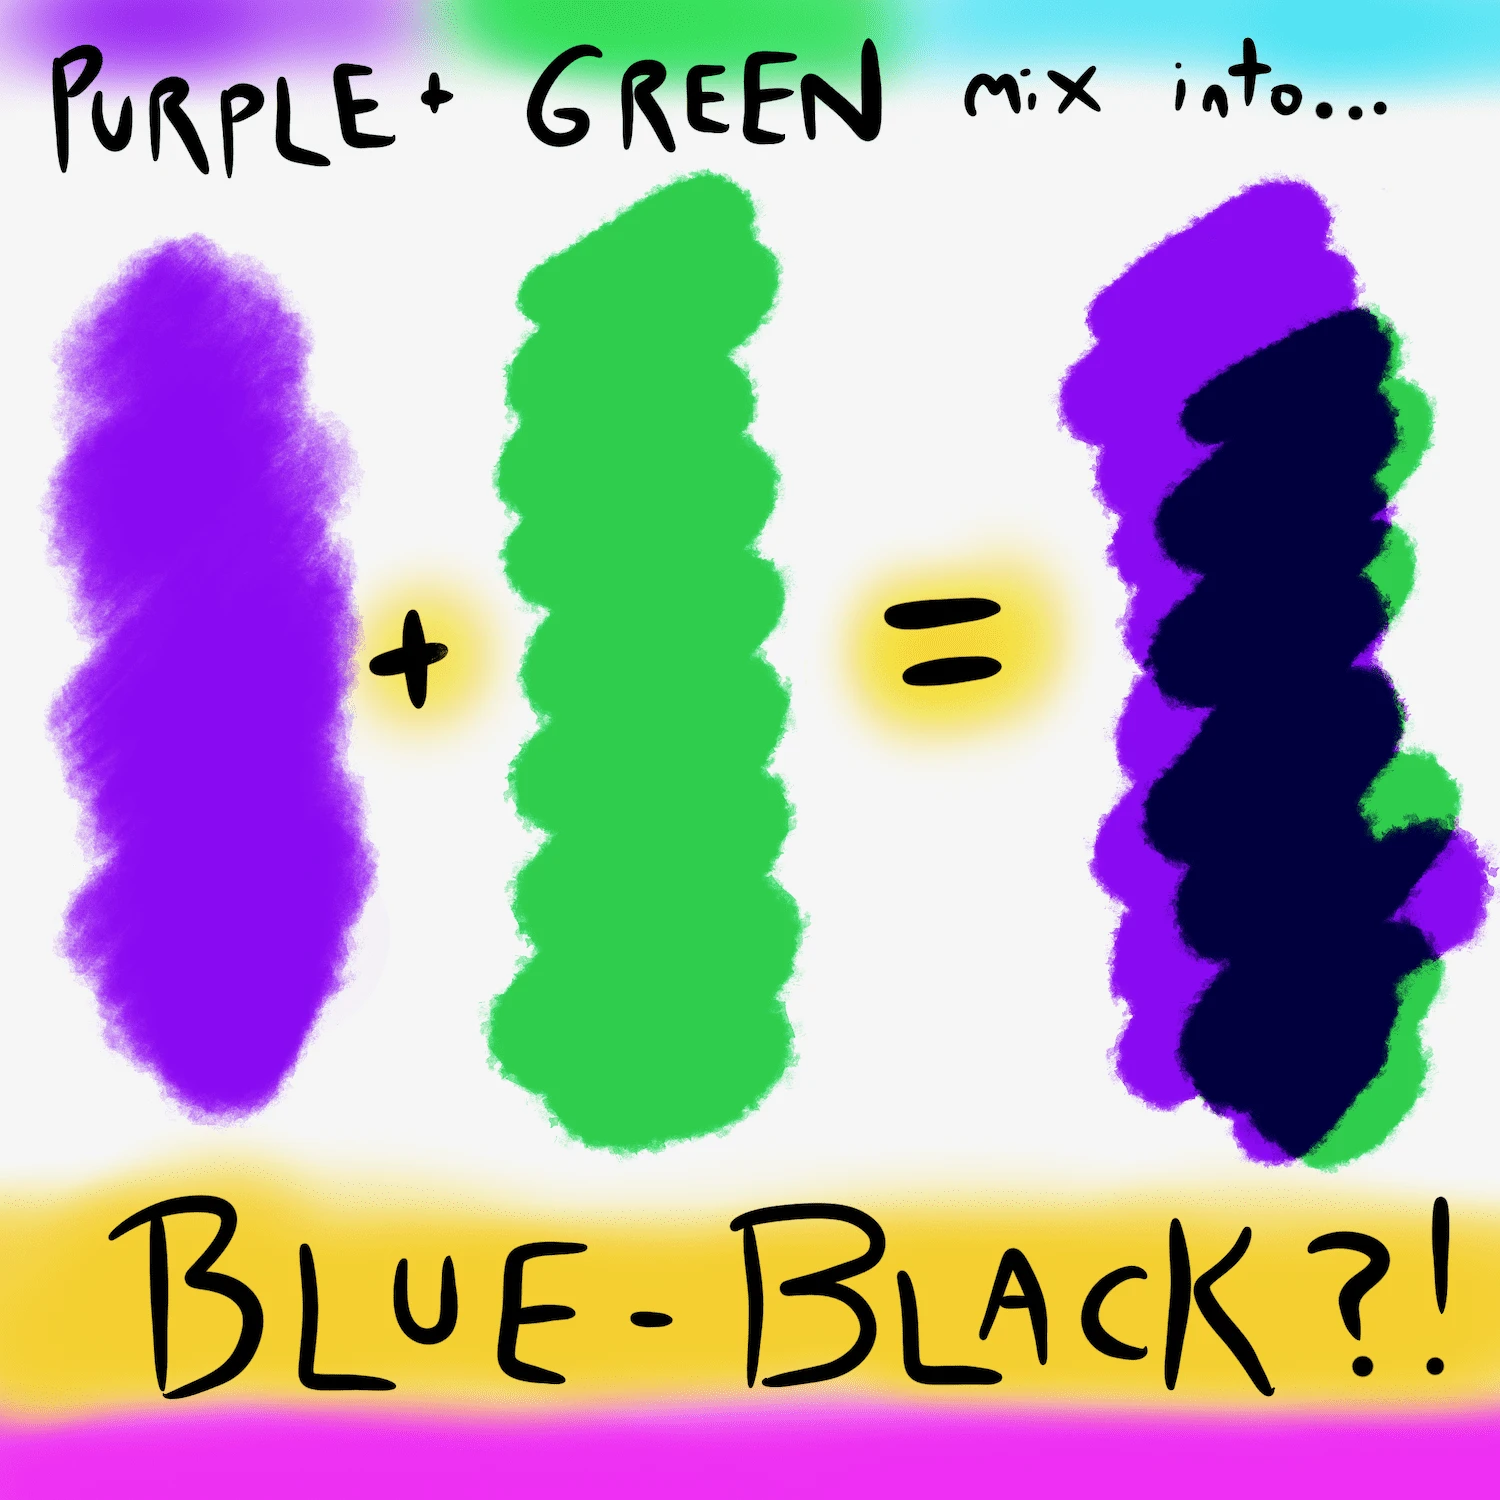 Green and purple make blue black